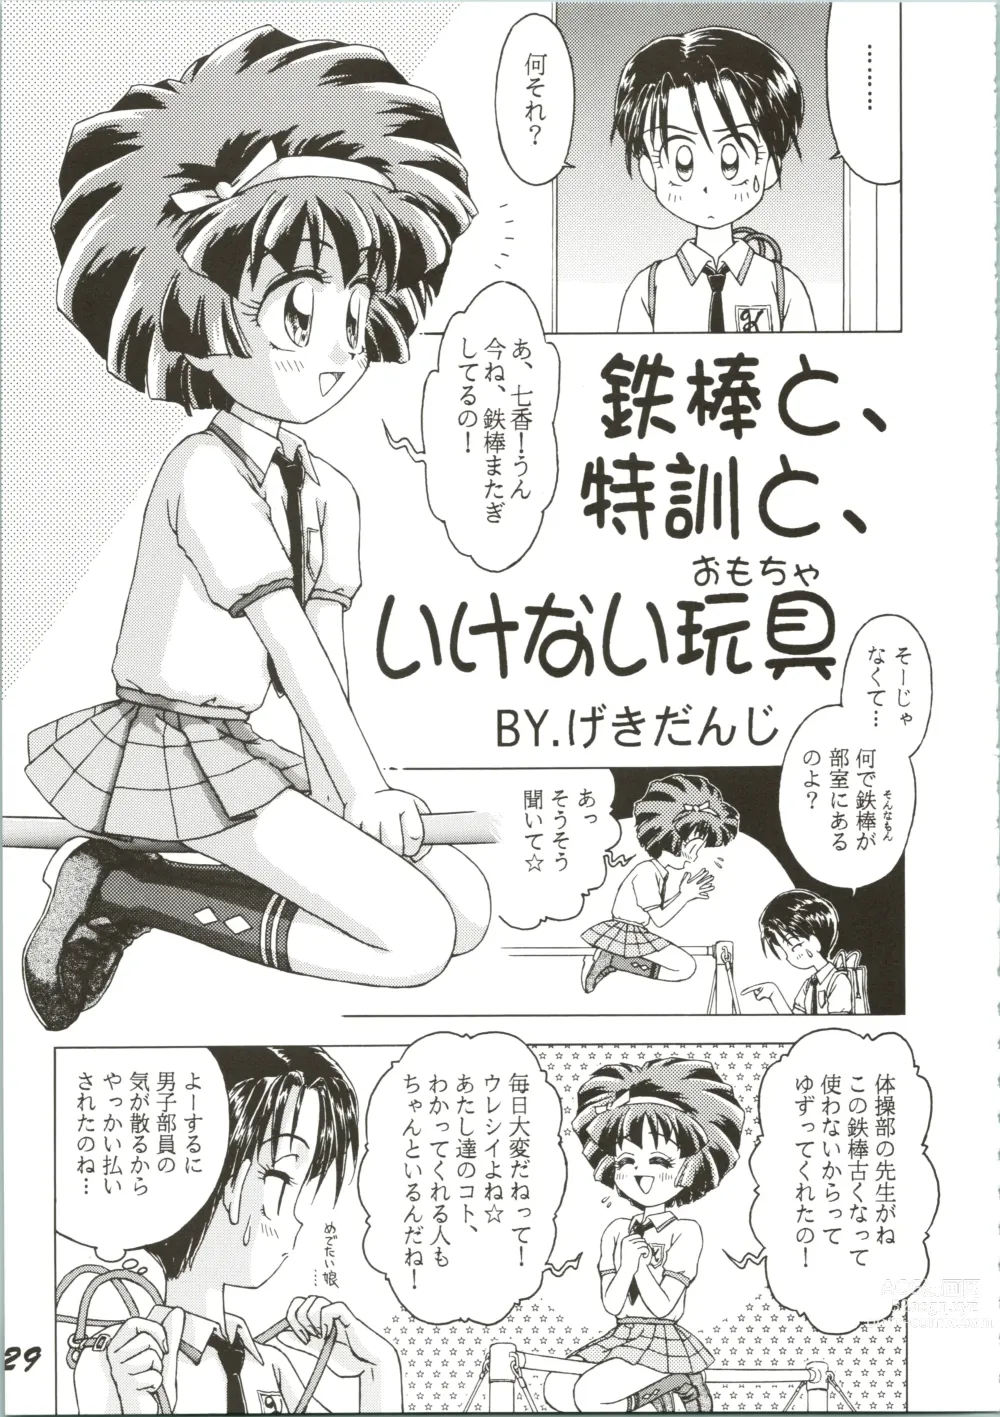 Page 29 of doujinshi OVA SPIRITS